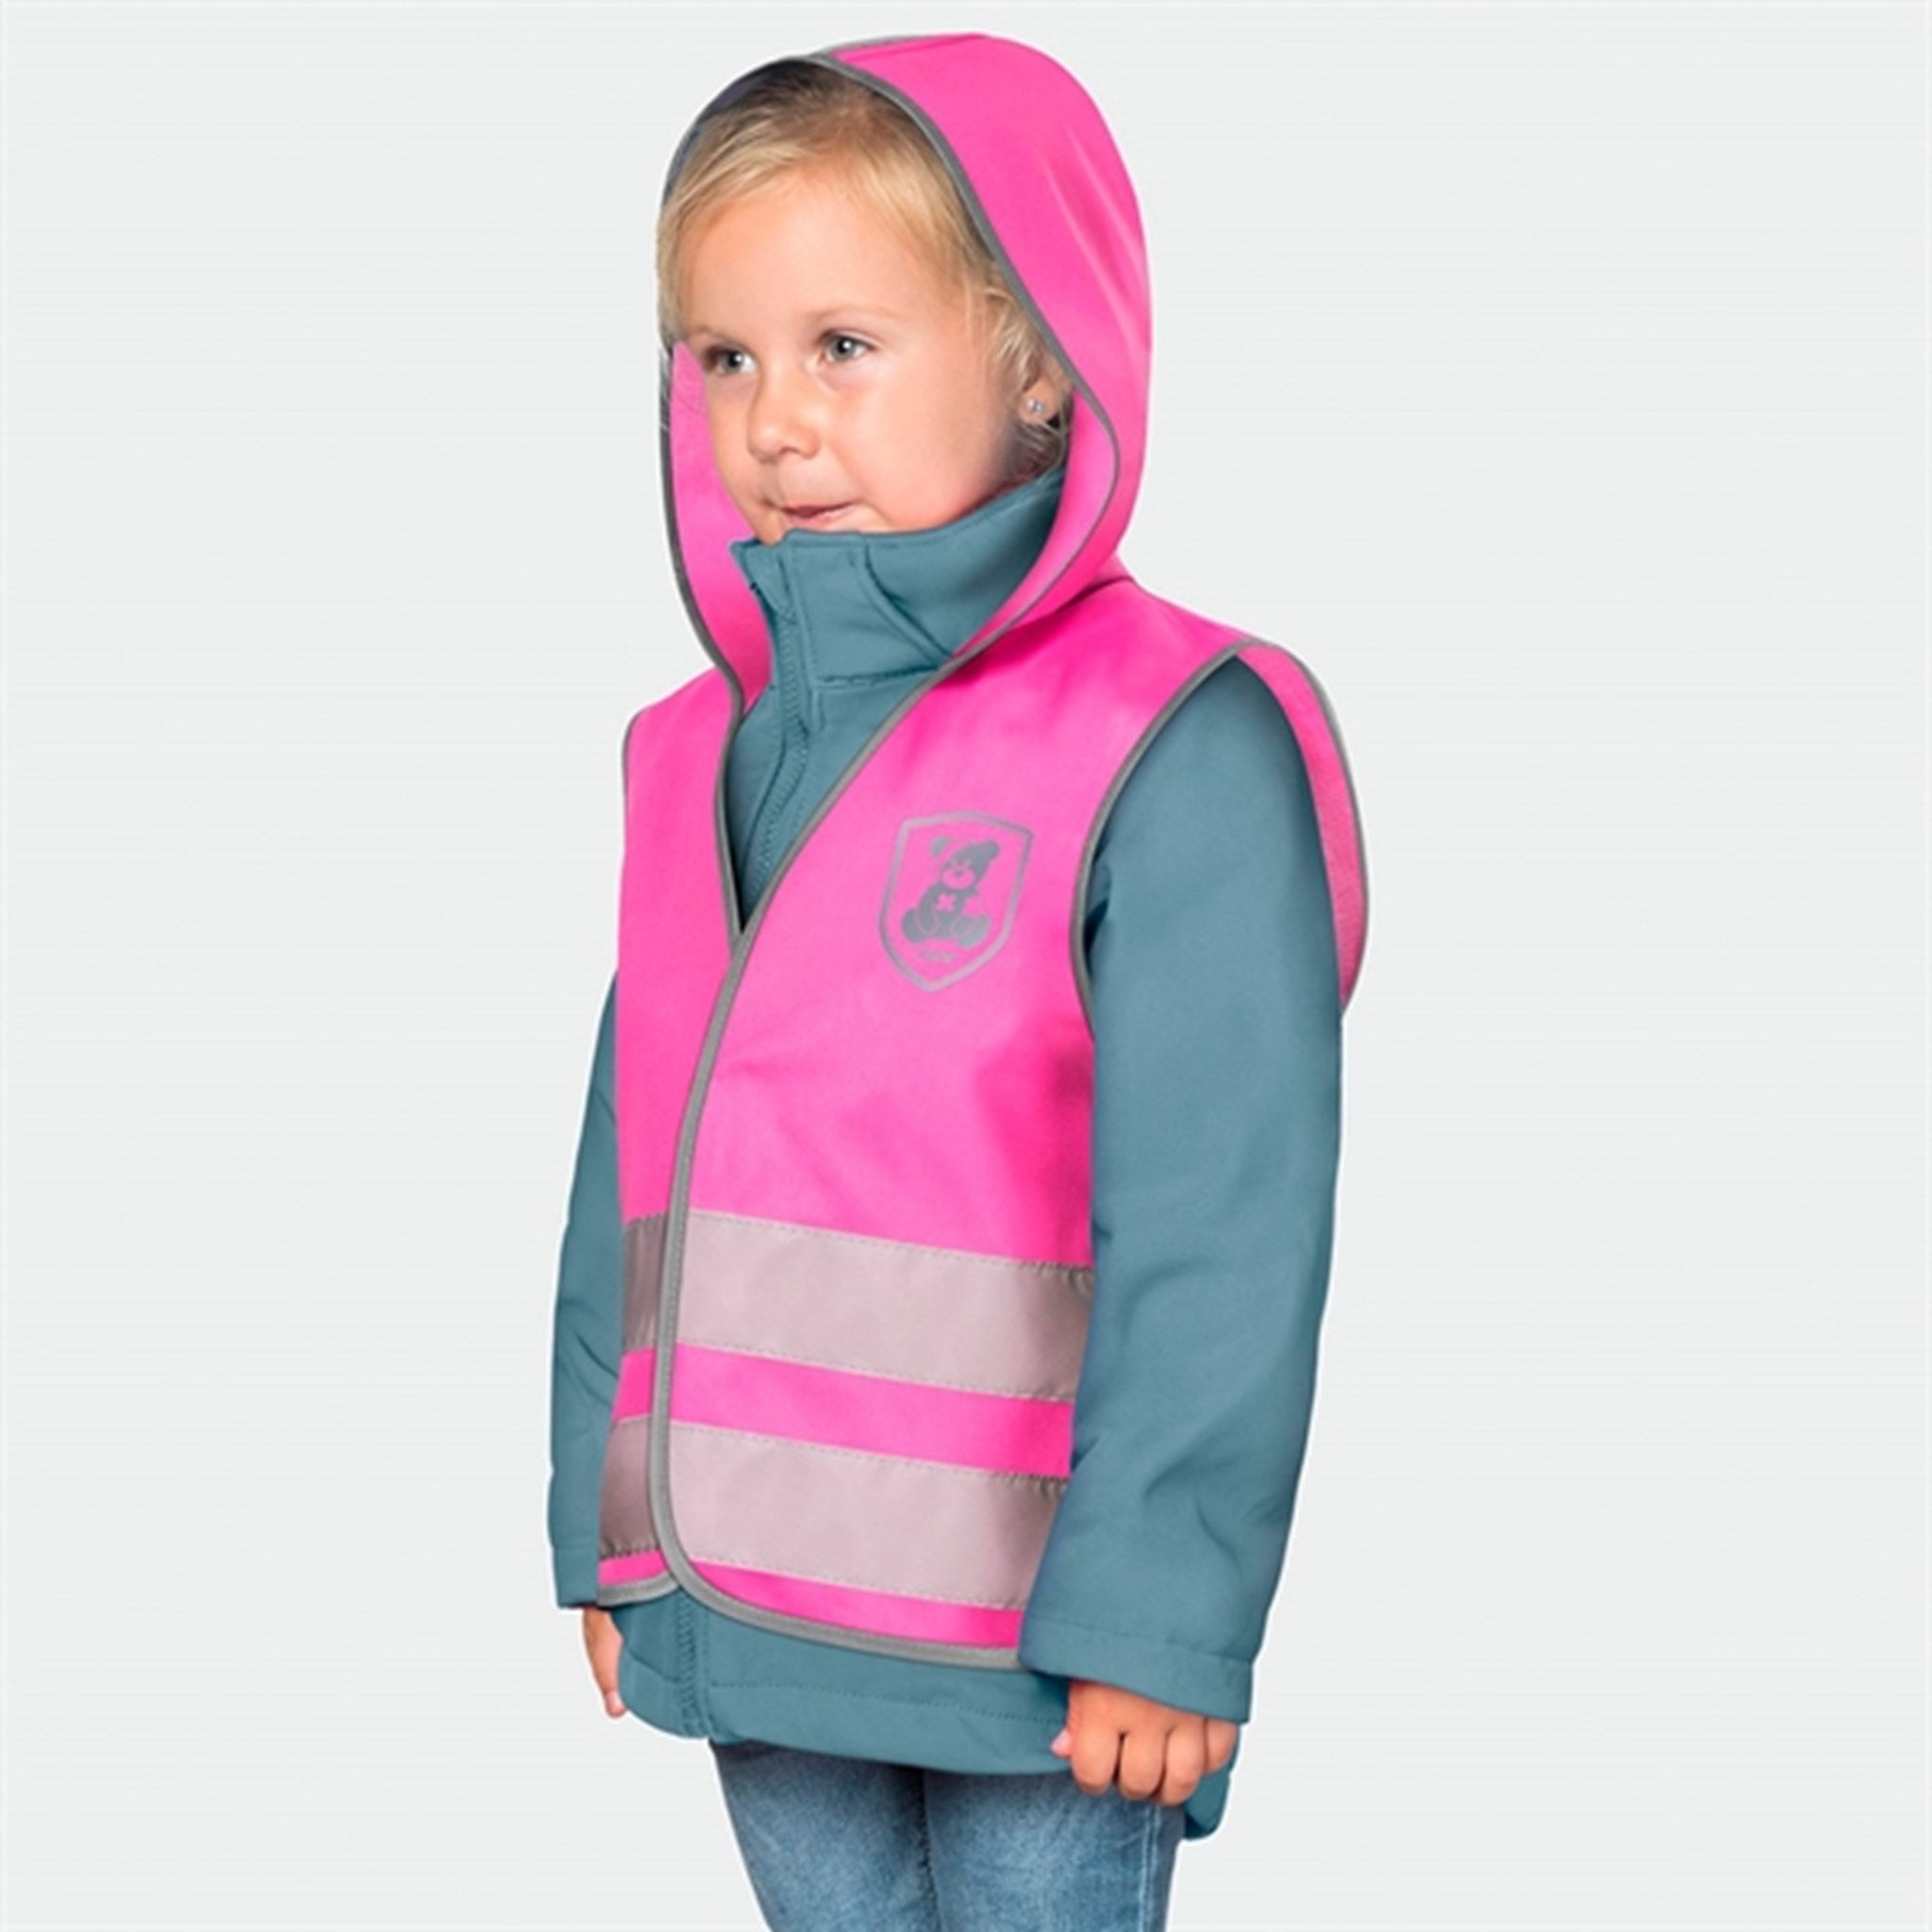 REER Security Vest Pink 3